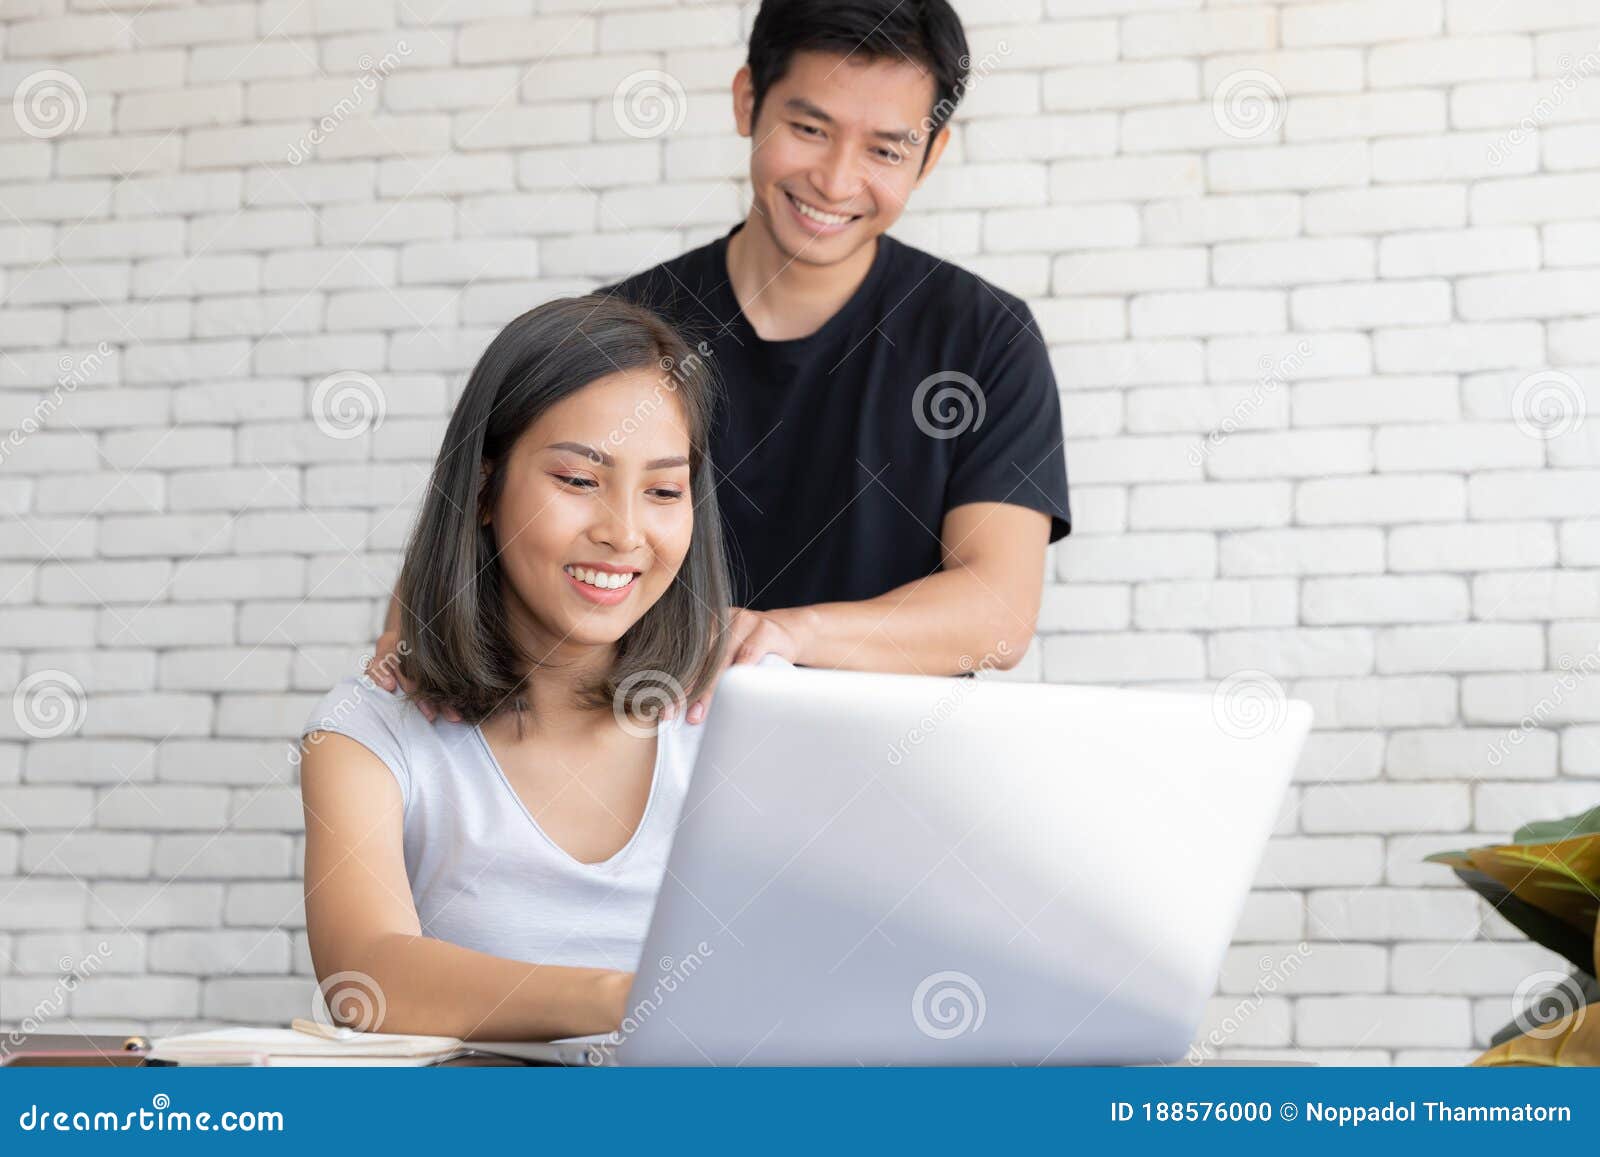 https://thumbs.dreamstime.com/z/portrait-young-smiling-couple-working-laptop-home-man-massage-shoulder-girl-men-relaxing-188576000.jpg